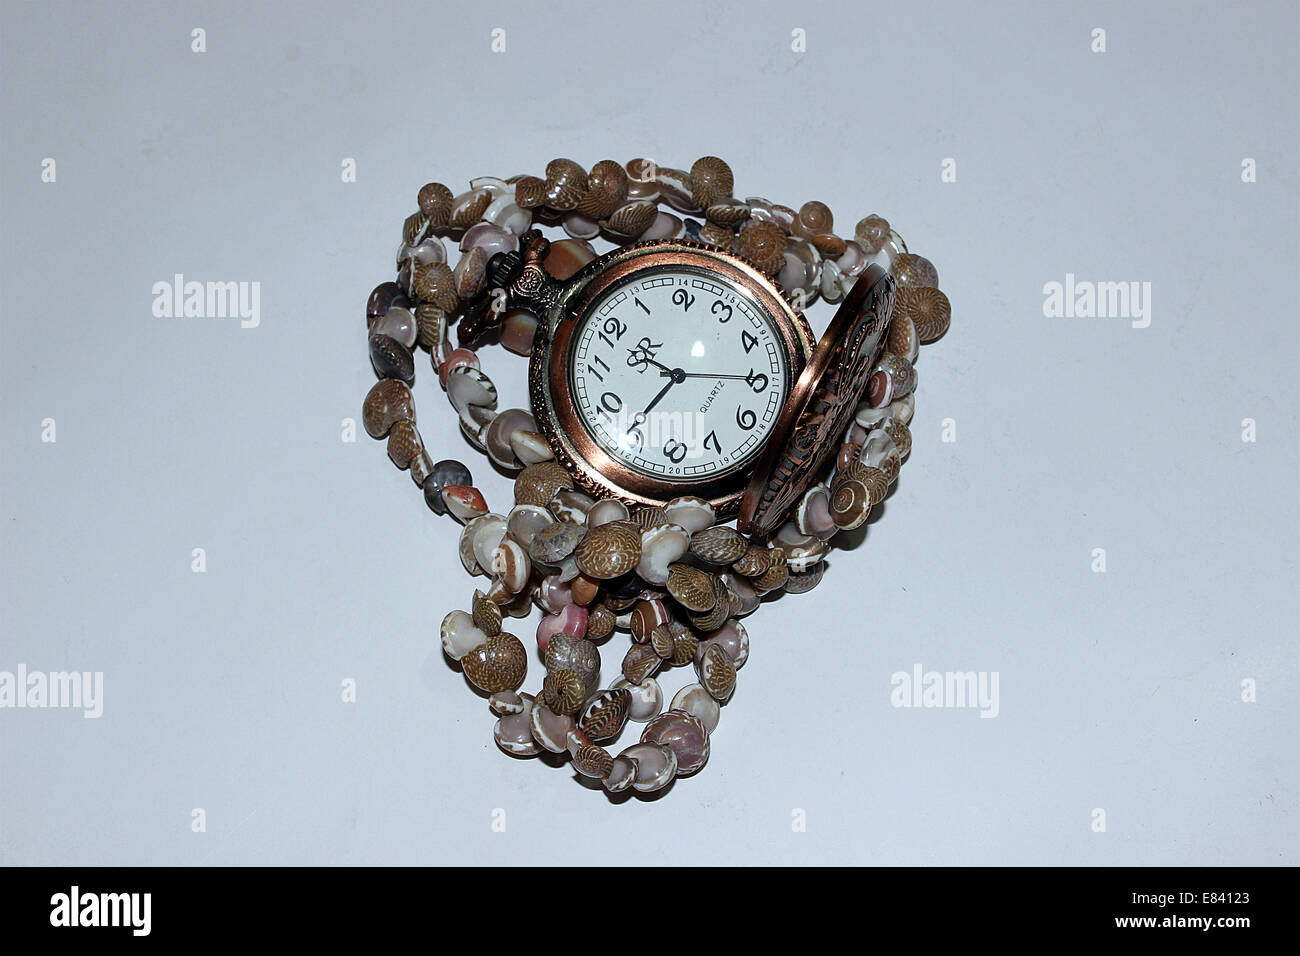 Antiquewatch, Vintagewatch, montre, horloger, montres, vintagewlots, vintage, watchesofinstagram, watchfamd, antique, horologie, horlogerie, paq Banque D'Images